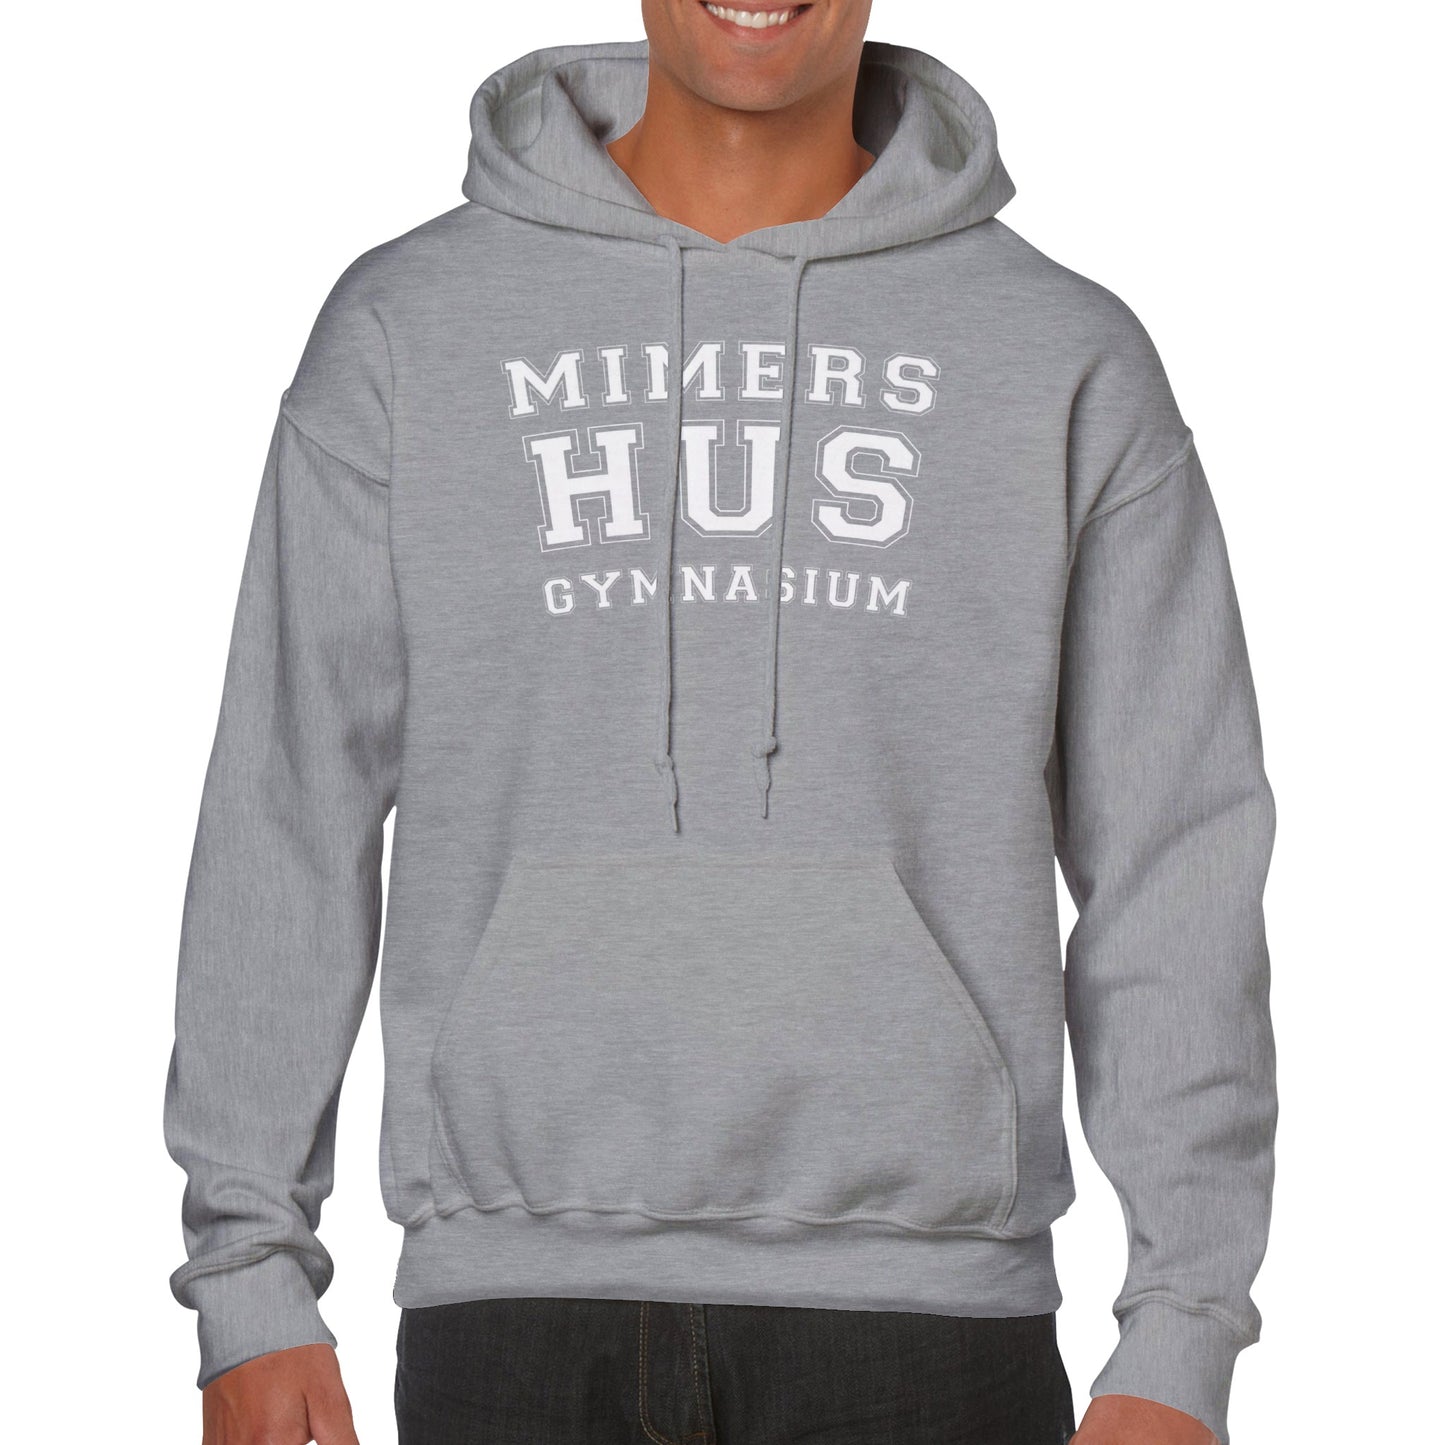 MIMERS HUS GYMNASIUM - Unisex hoodie - 5 färger